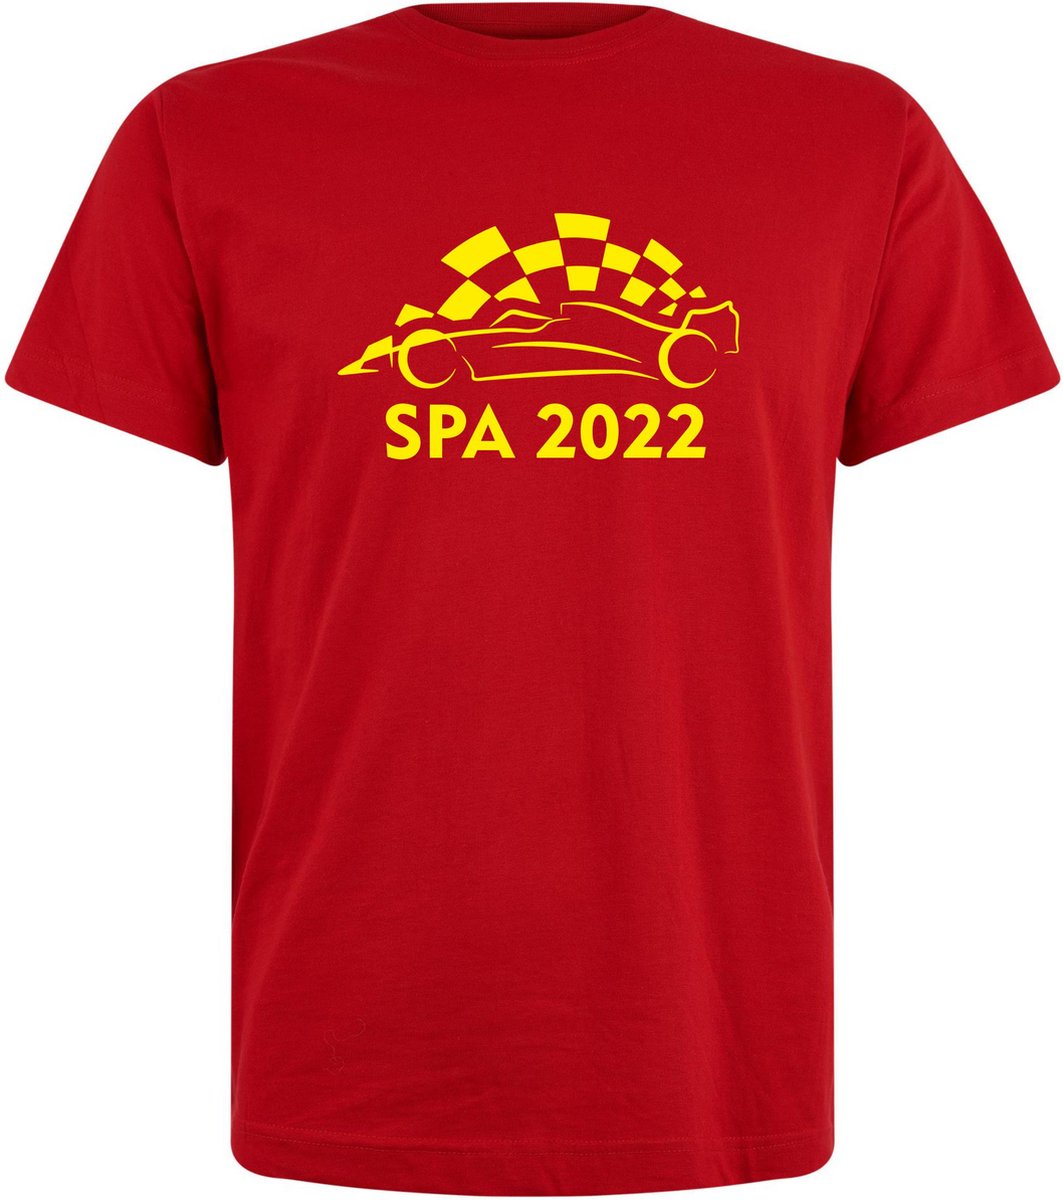 T-shirt Spa 2022 met raceauto | Max Verstappen / Red Bull Racing / Formule 1 fan | Grand Prix Circuit Spa-Francorchamps | kleding shirt | Rood | maat 5XL